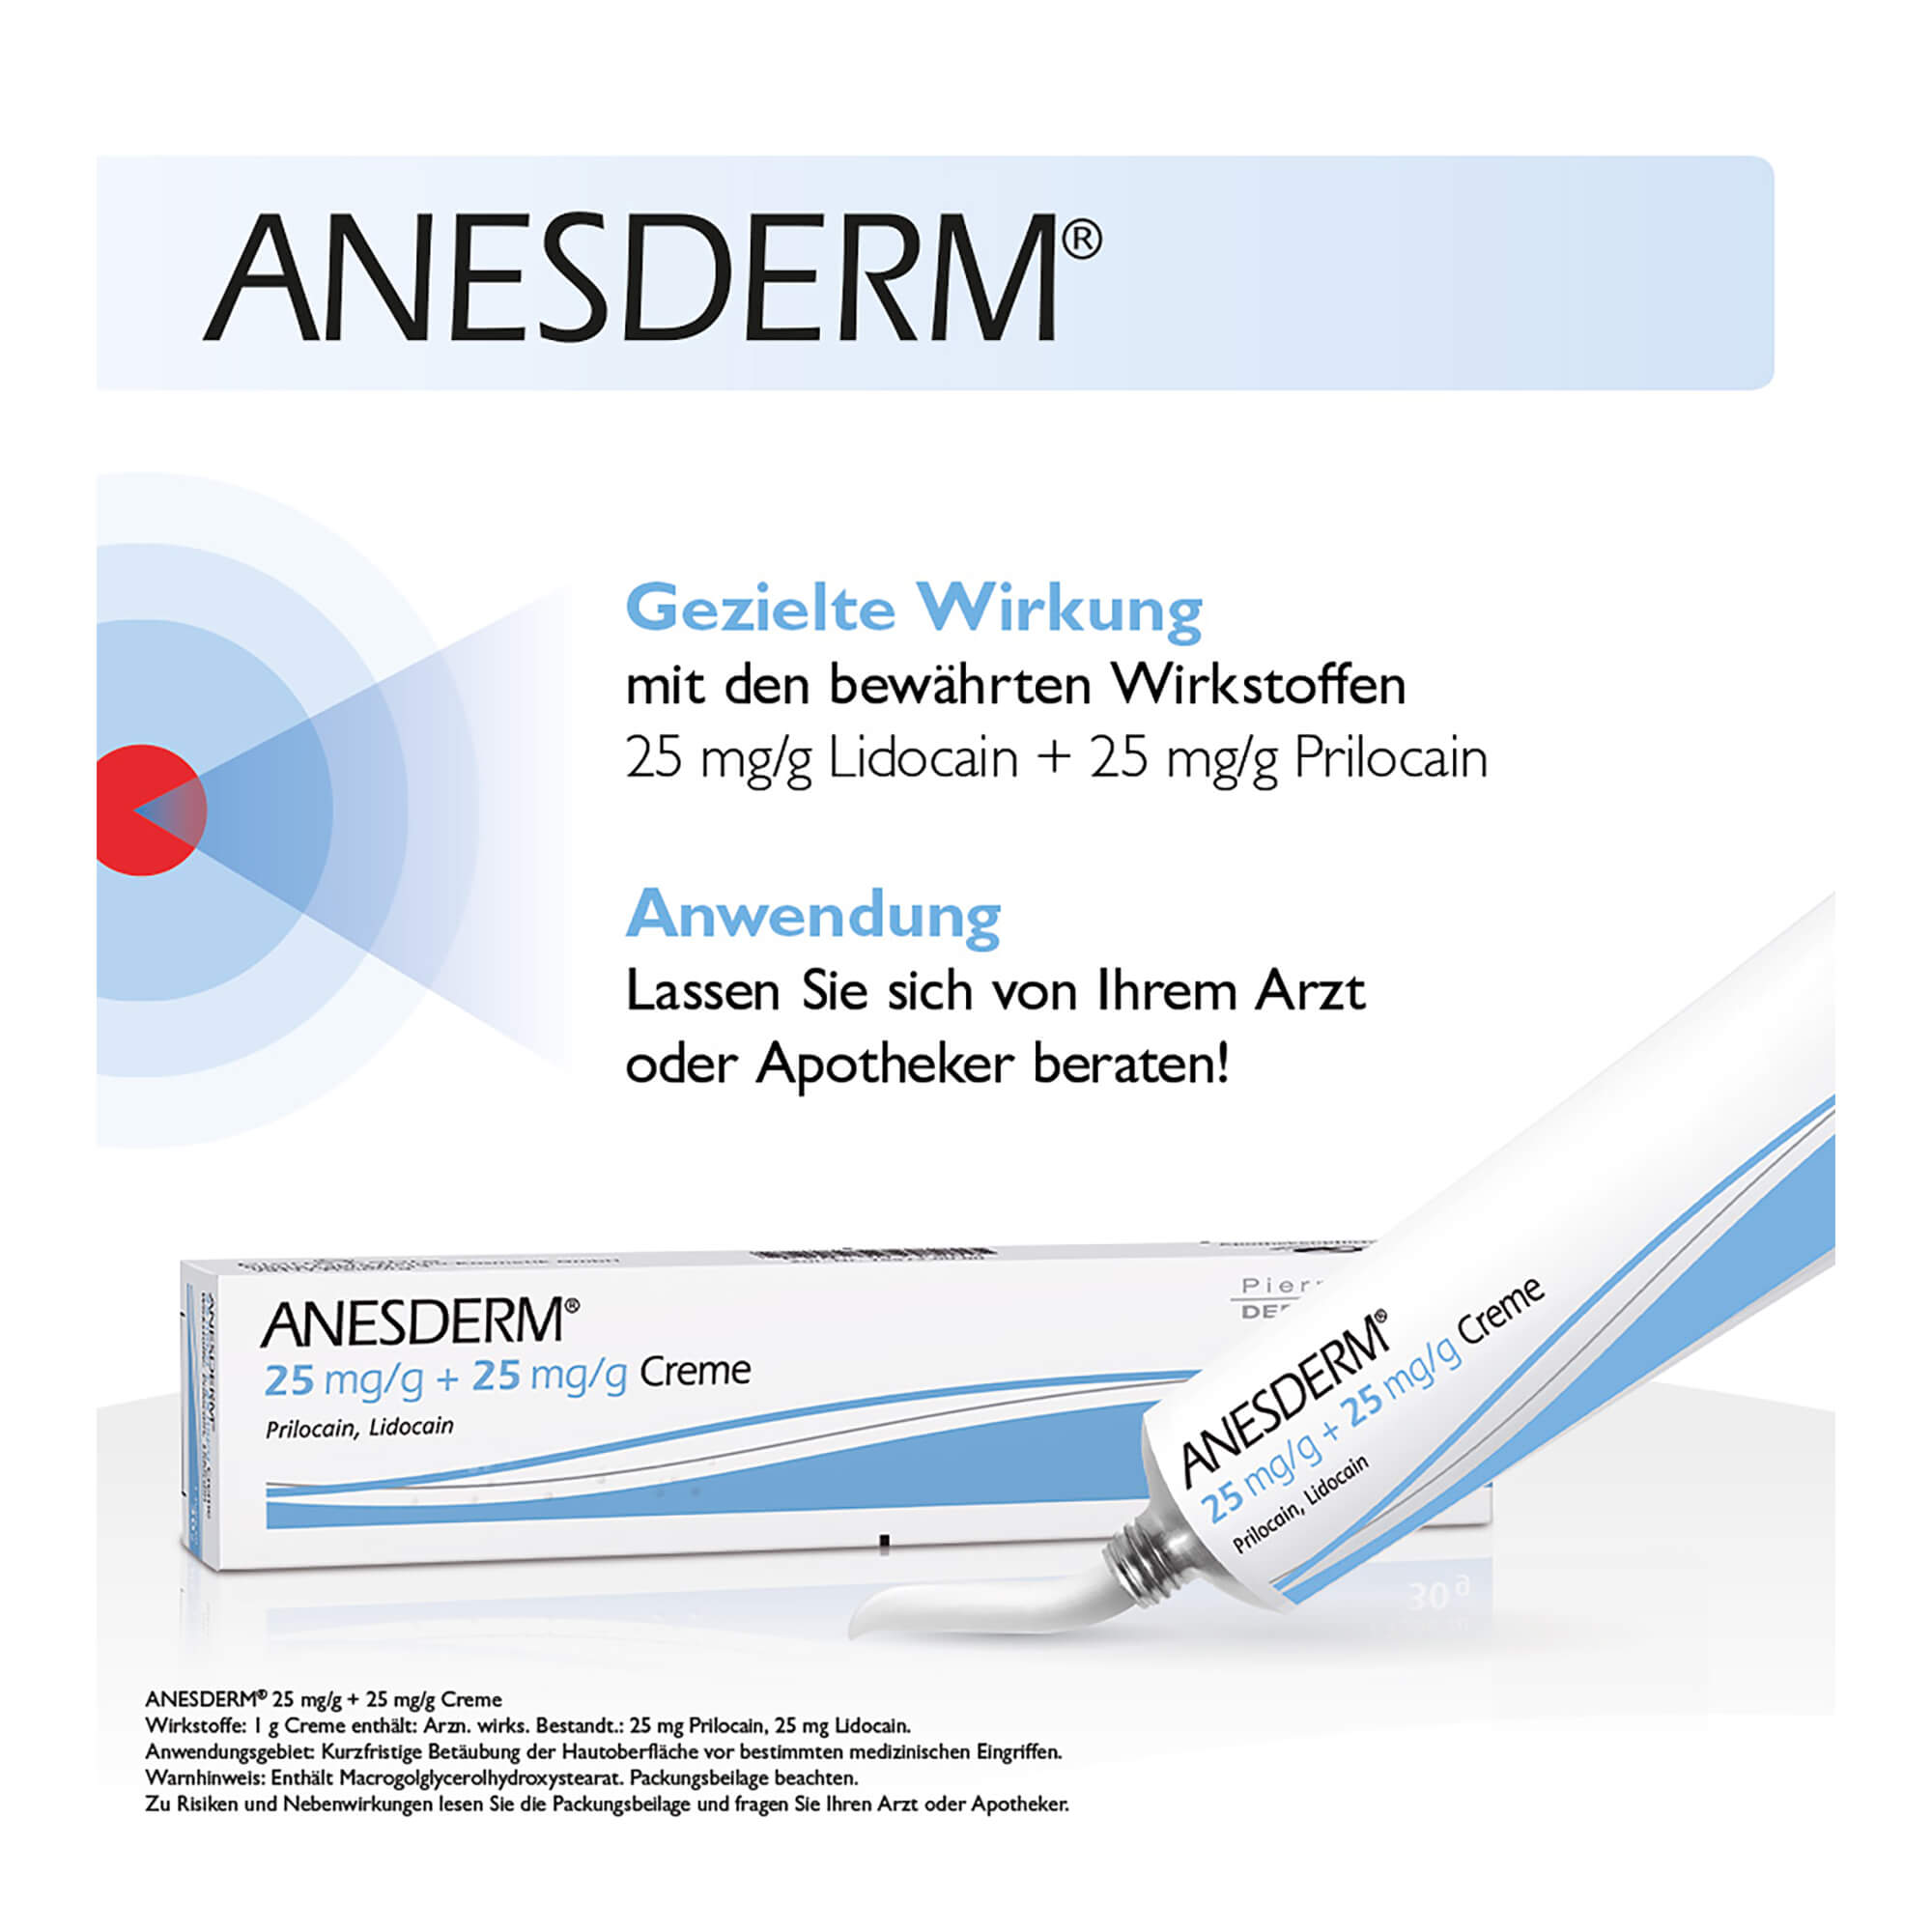 Anesderm 25 mg/g + 25 mg/g Creme